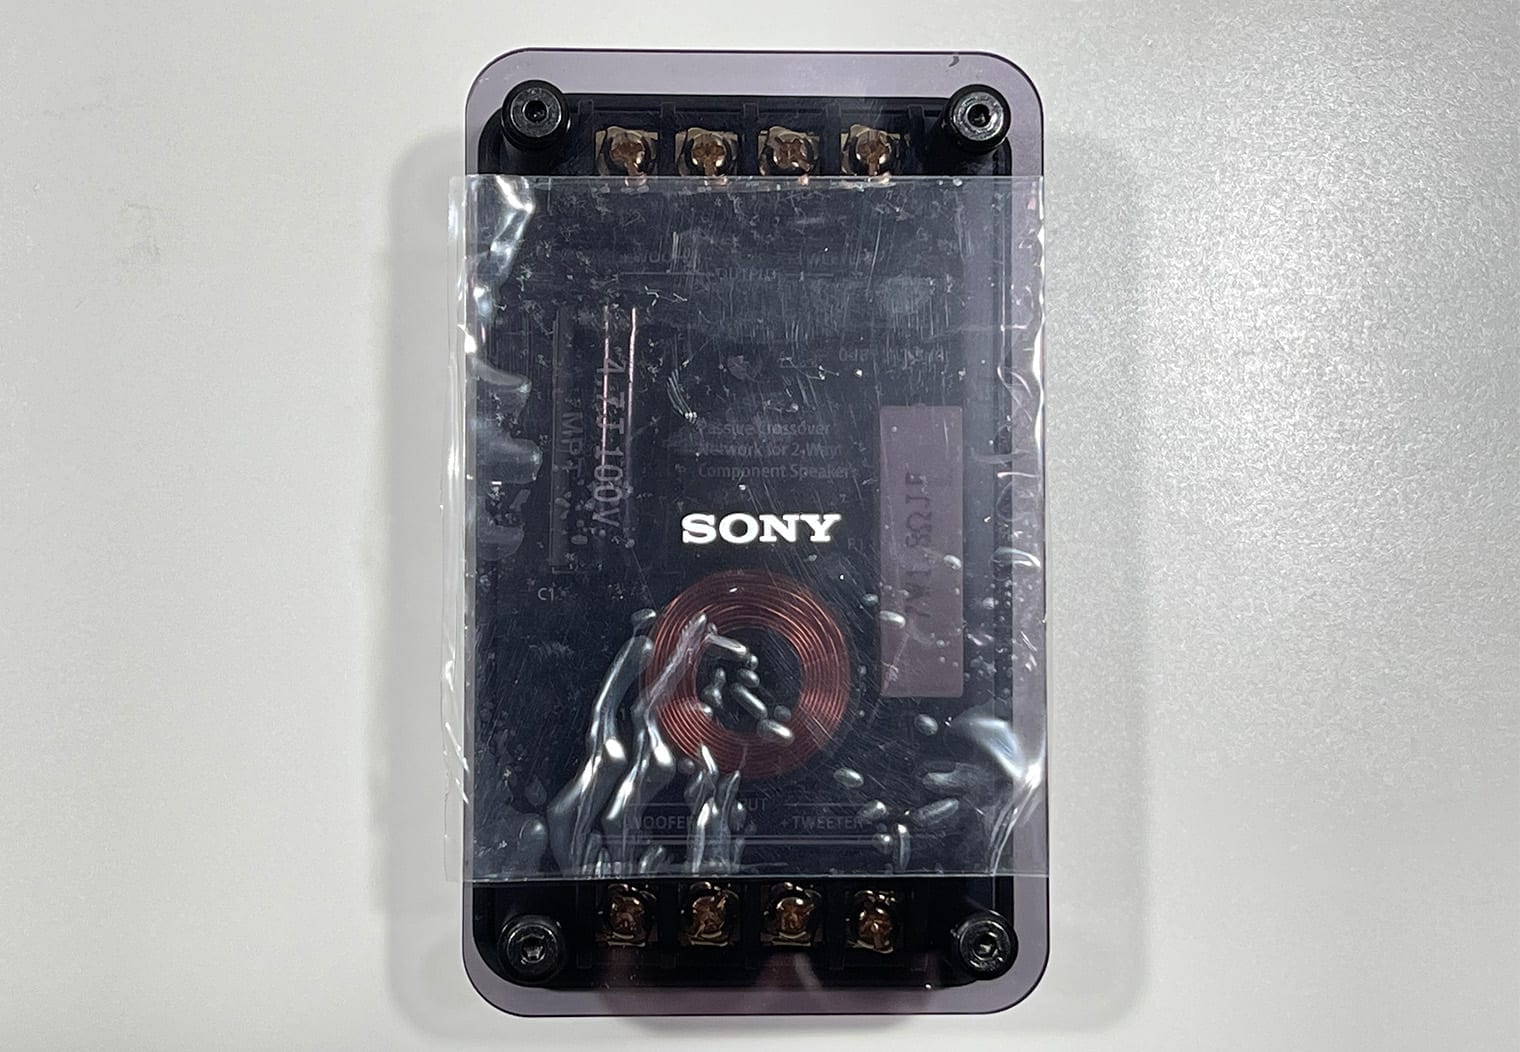 Sony XS-162ES single crossover